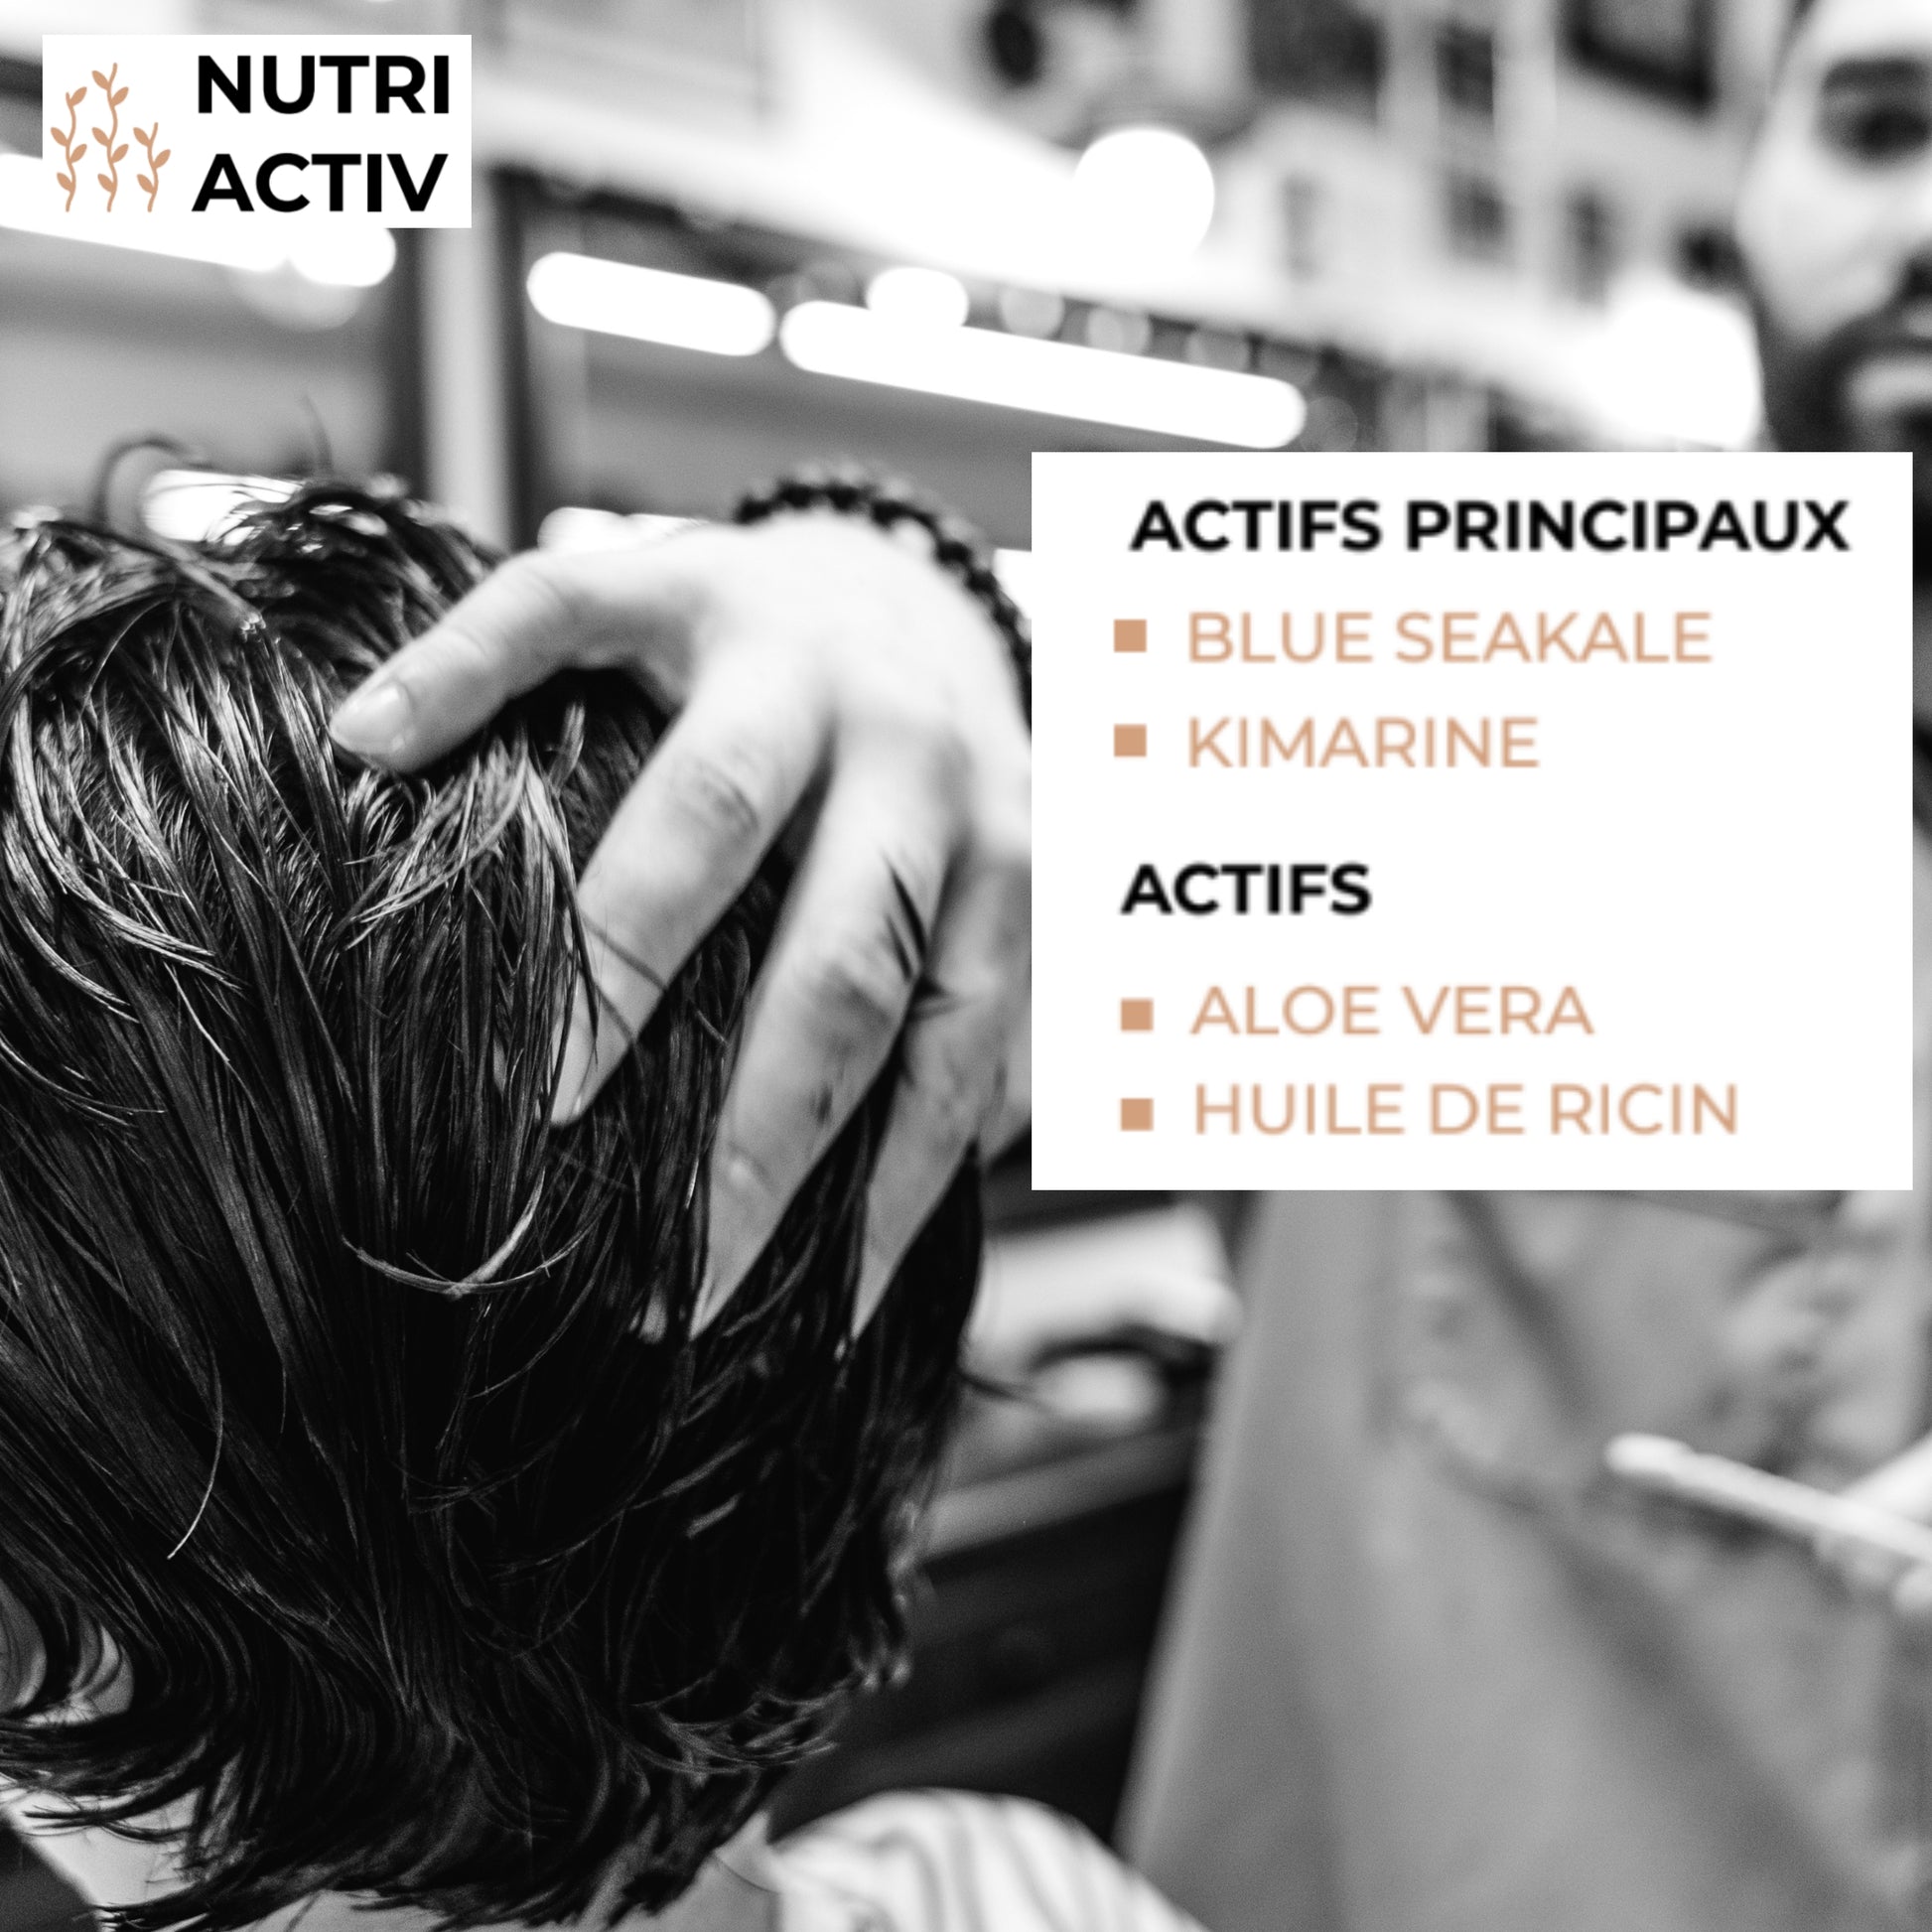 a&s_moncheveu.fr_shampoing_nutri activ_cheveux_à_tendance_grasse_vegan_98,6%_ingredients_naturels_blue seakale_kimarine_aloe vera_huile de ricin